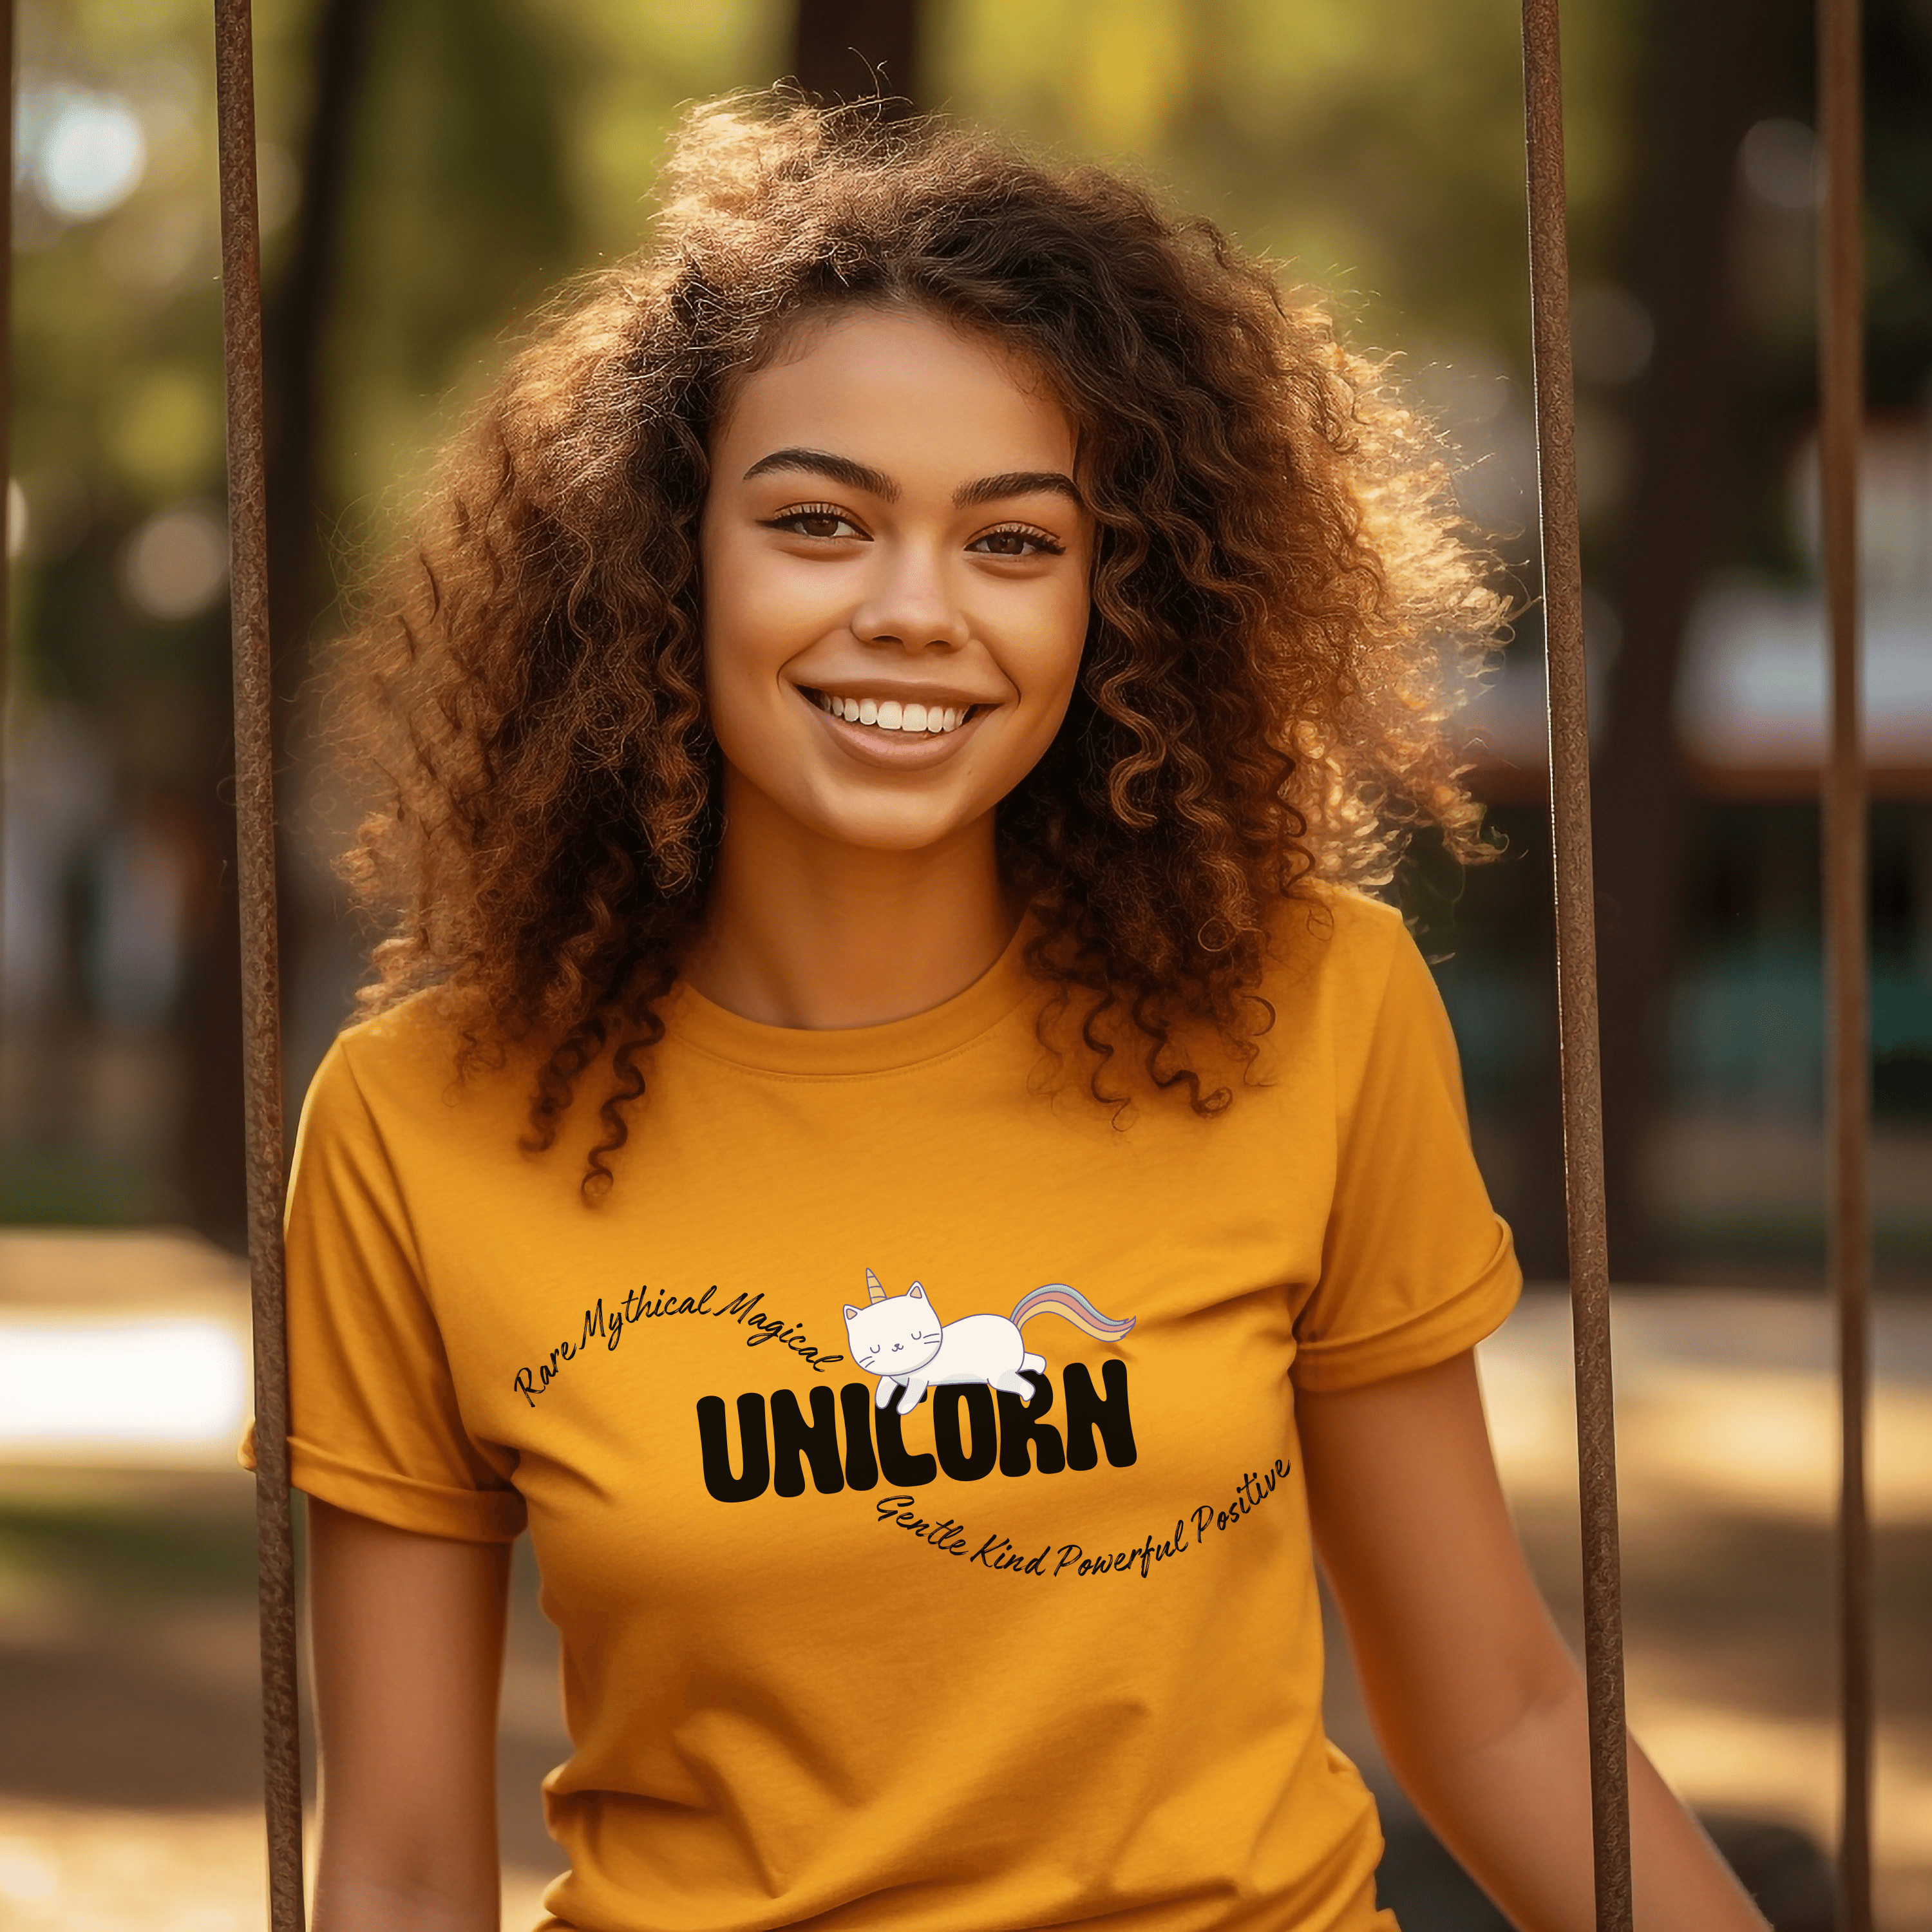 Rare Mythical, Magical, Gentle, Kind, Powerful Positive Unicorn T-shirt